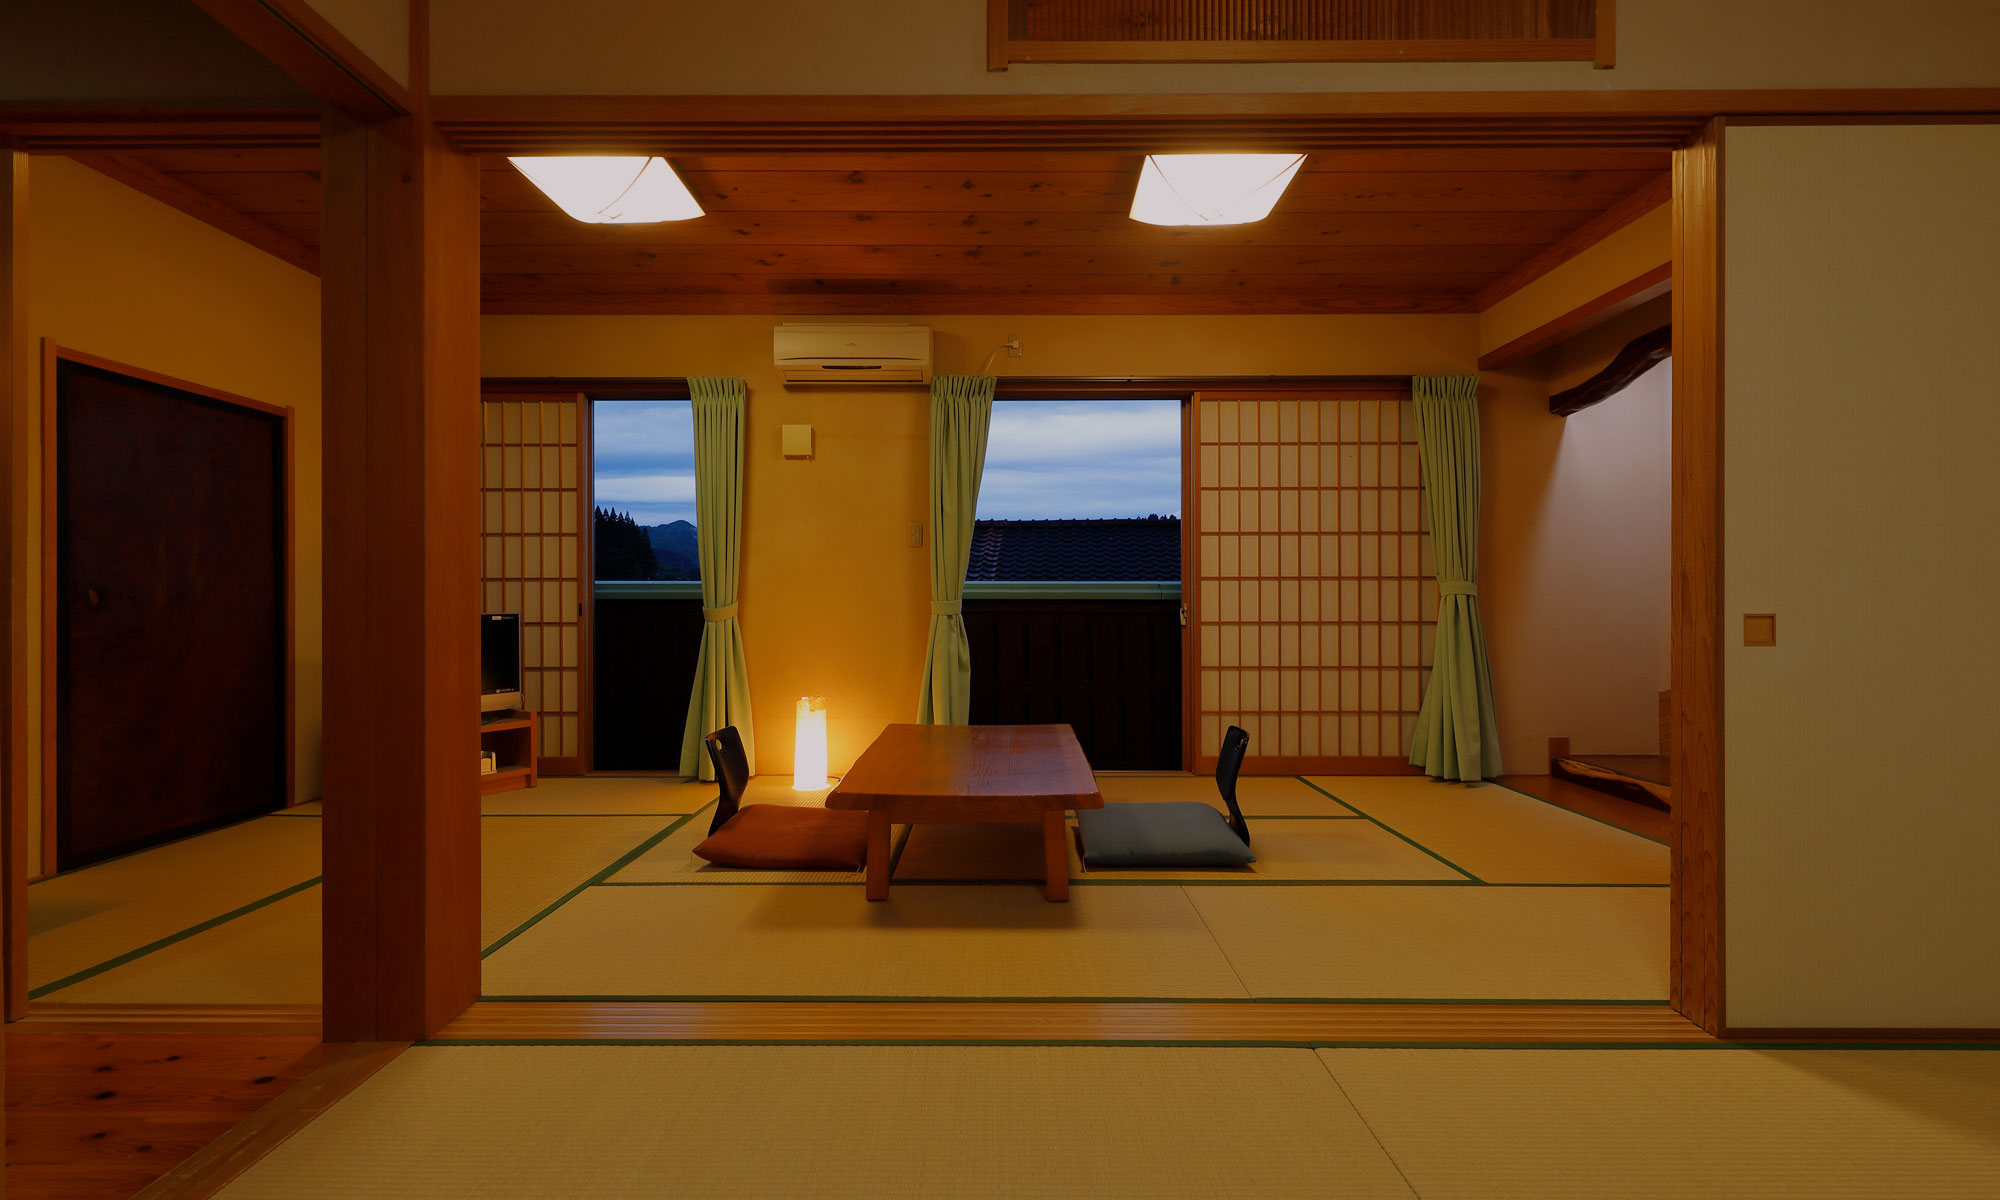 Japanese-style room 9 tatami mats